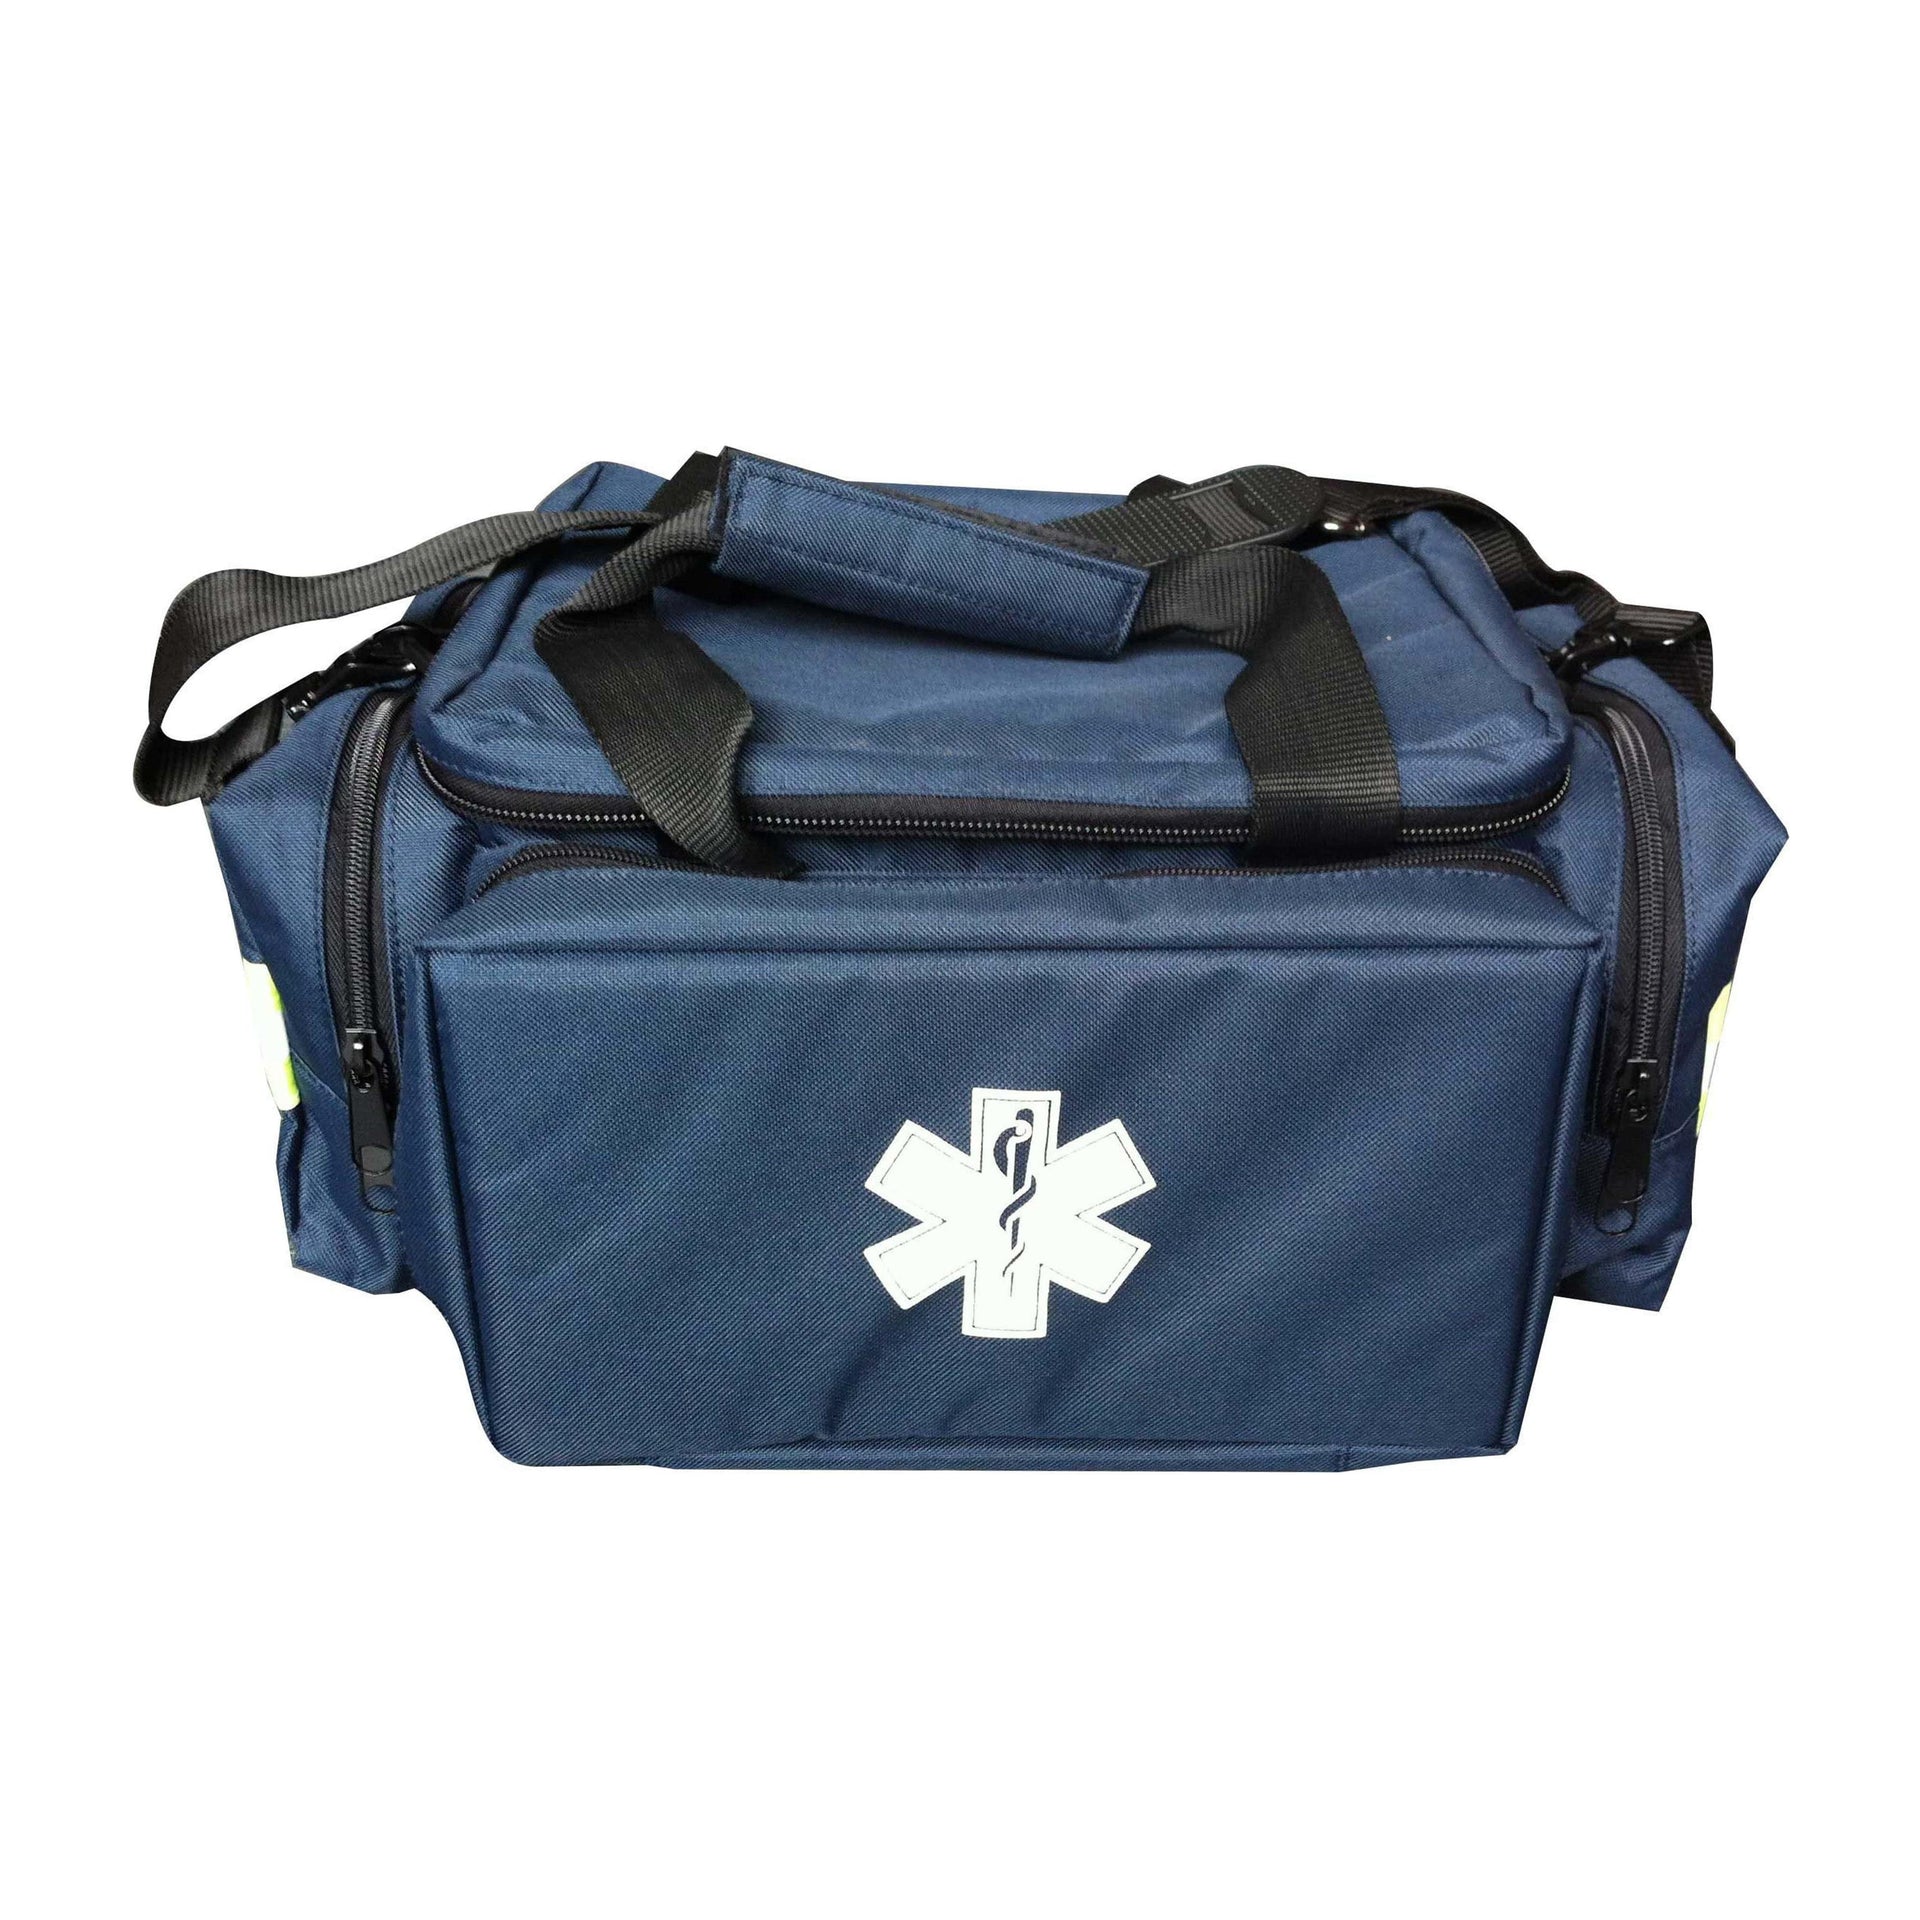 Paramedic Shop Add-Tech Pty Ltd Bag Large Trauma Bag - BAG ONLY